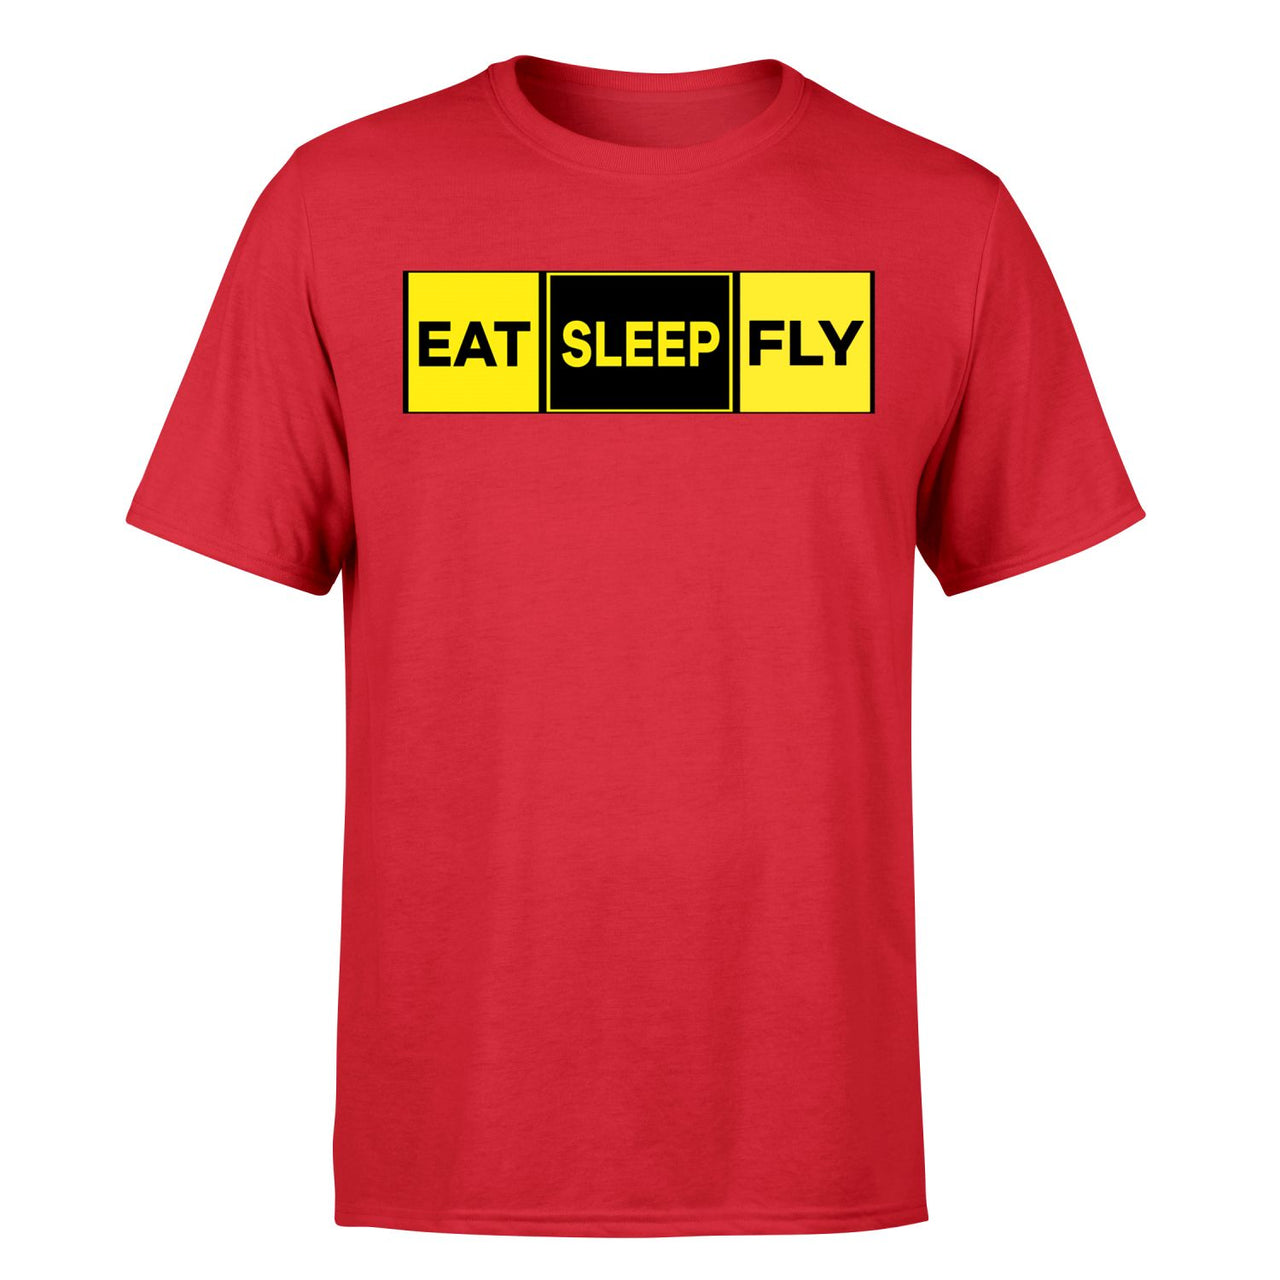 Eat Sleep Fly (Colourful) Designed T-Shirts